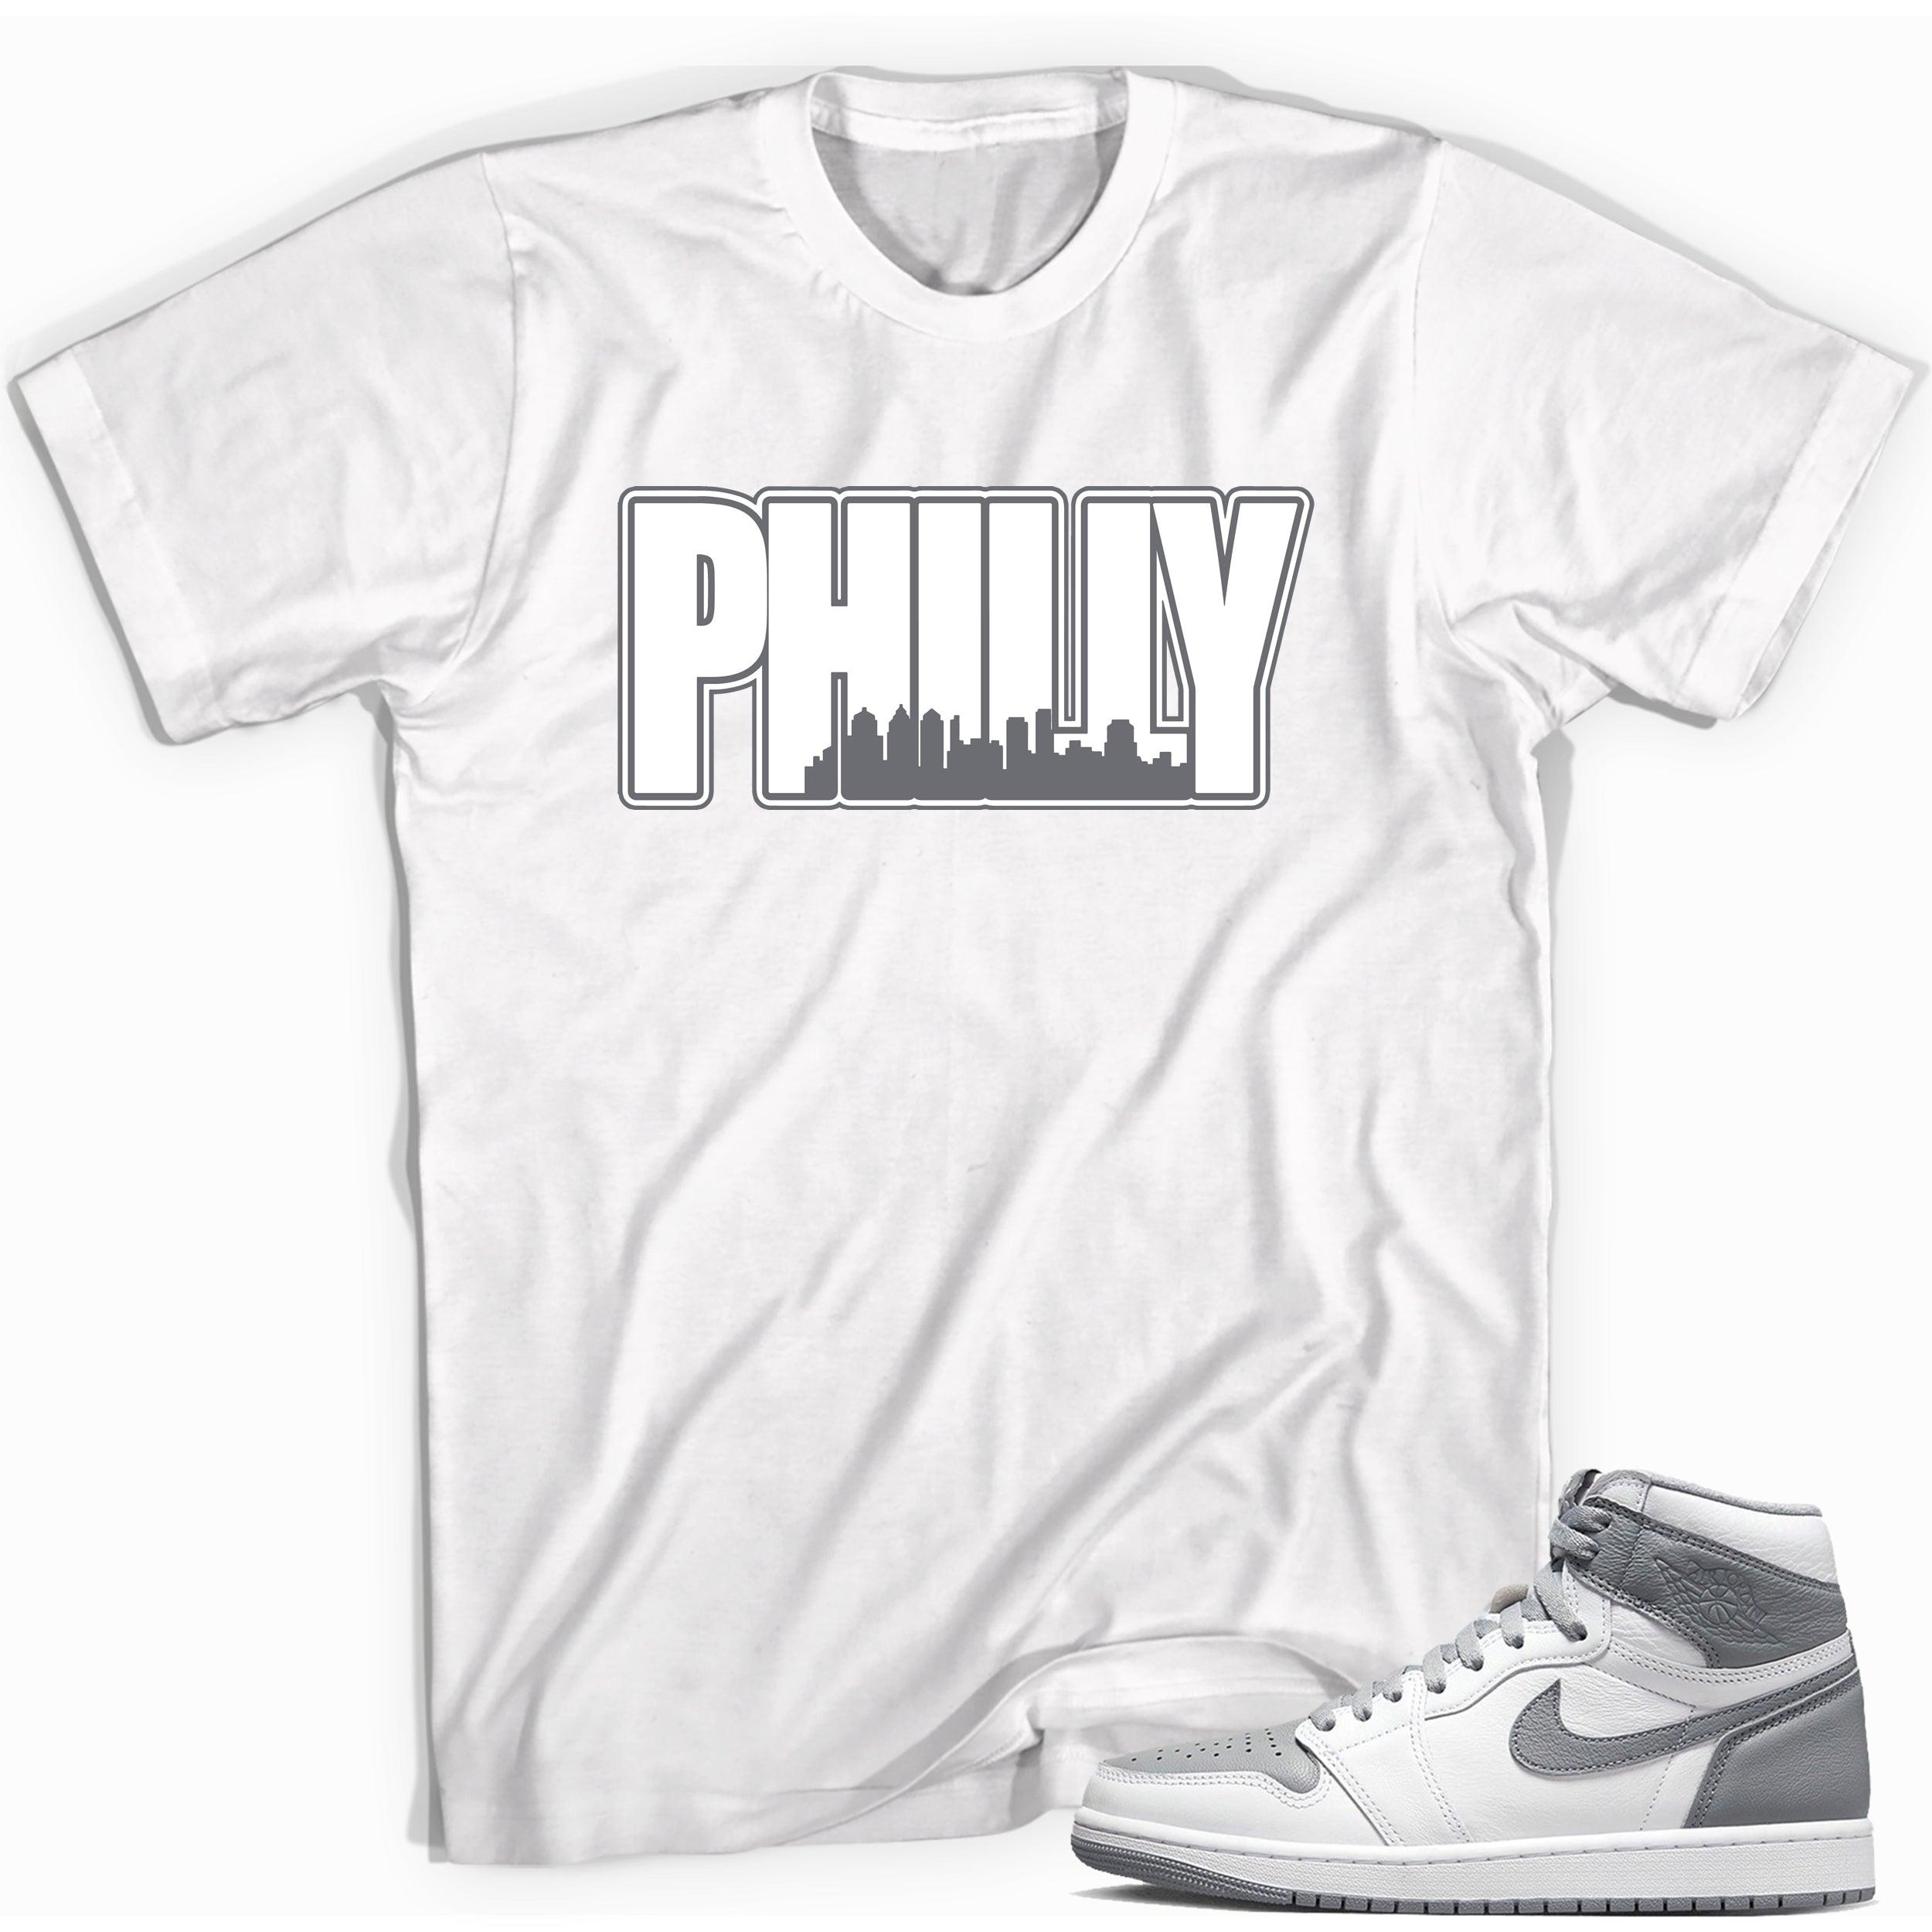 Philly Shirt for Jordan 1s photo